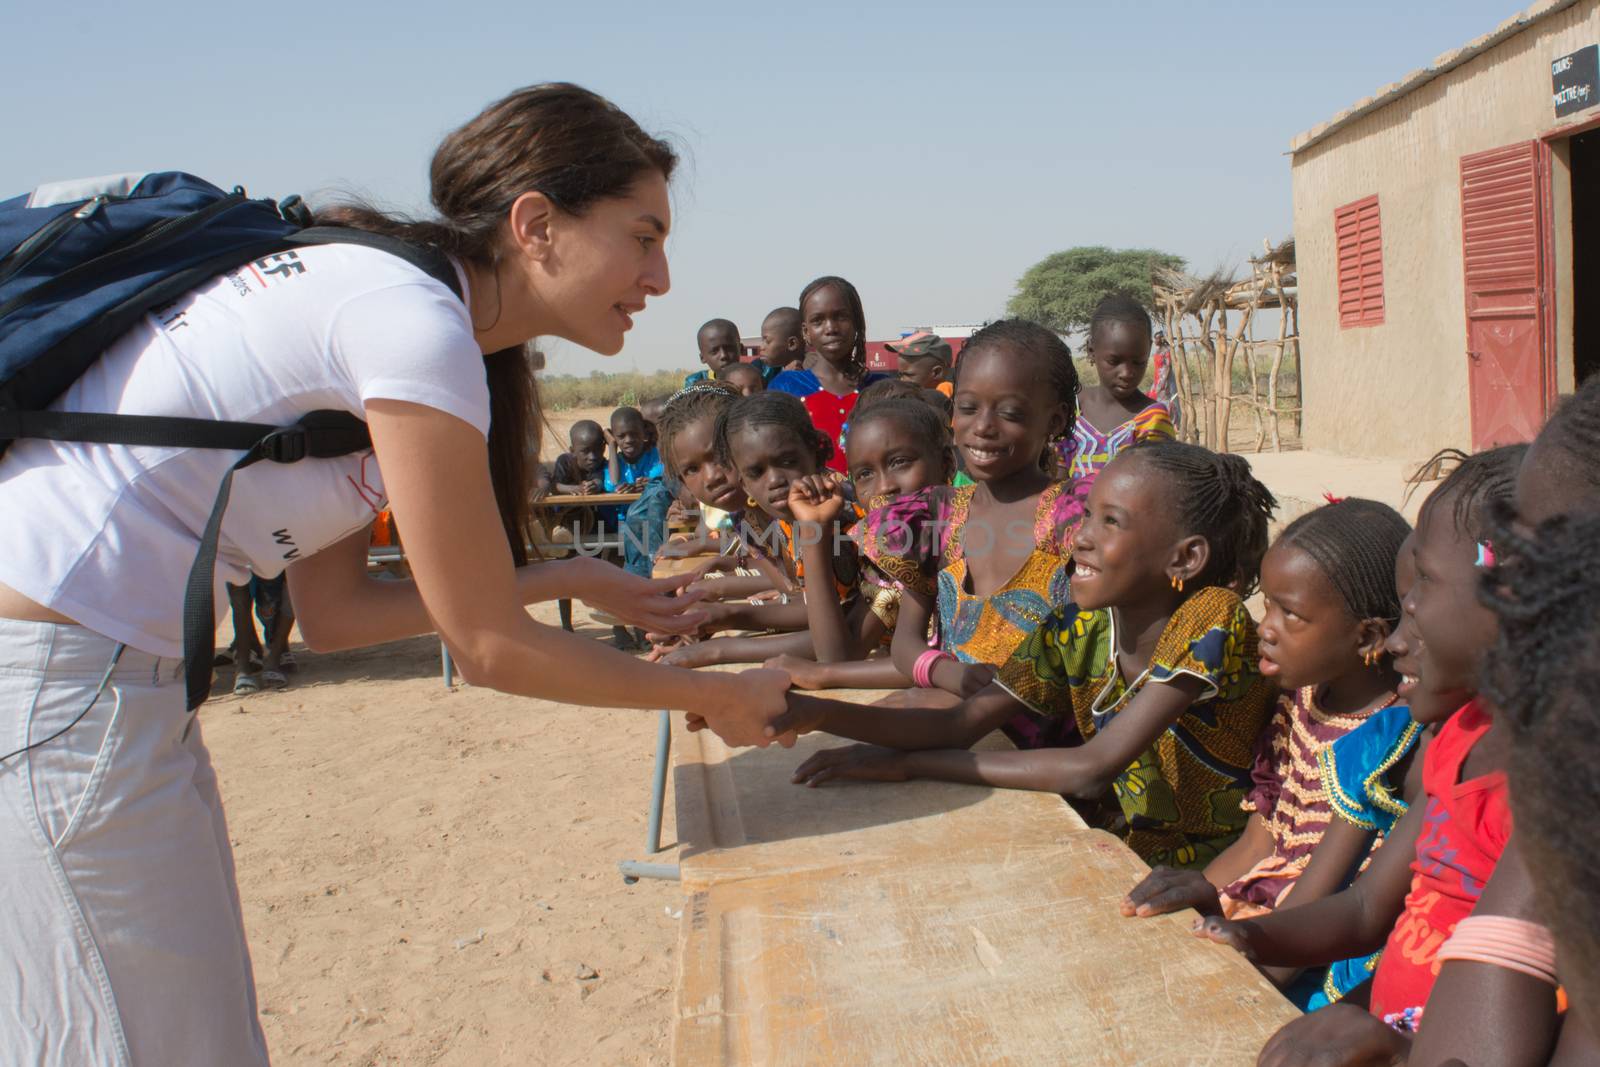 MATAM,SENEGAL-CIRCA NOVEMBER 2013:Actress Caterina Murino greets the children of an elementary school,Caterina Murino is the testimonial of the NGO AMREF,circa November 2013.